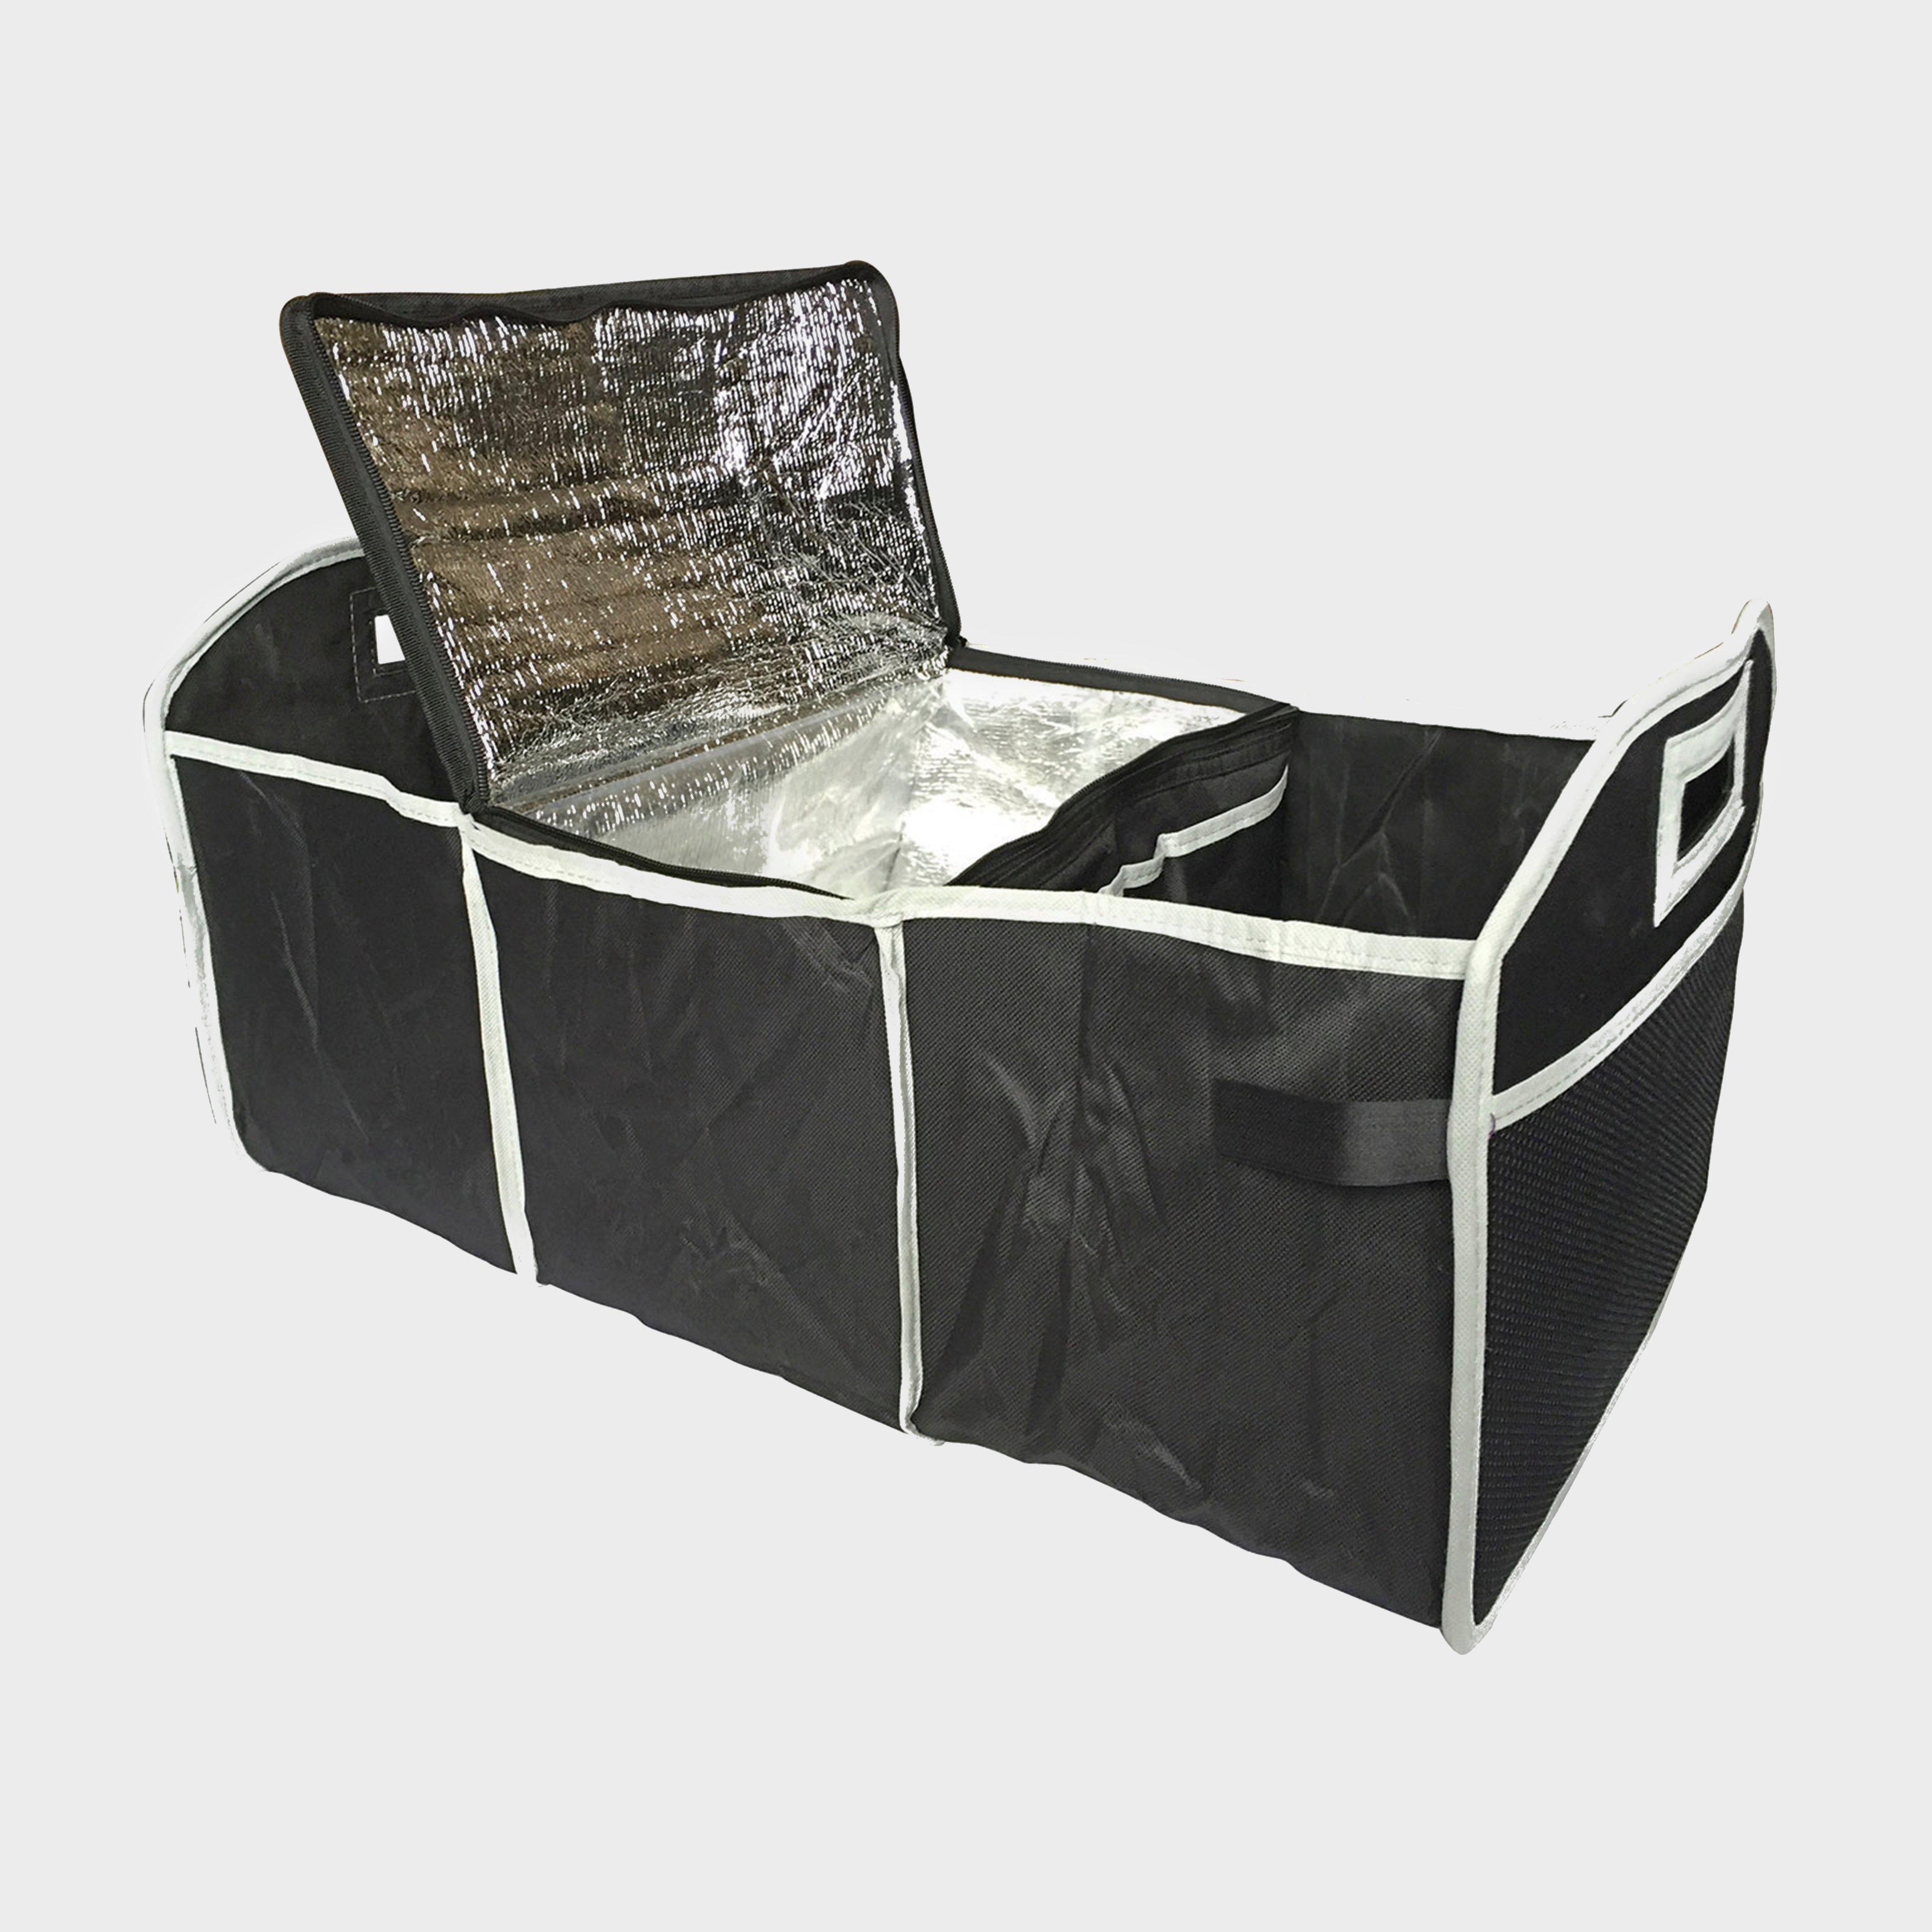 Streetwize Boot Organiser With Detachable Cooler Bag - Black/bag  Black/bag